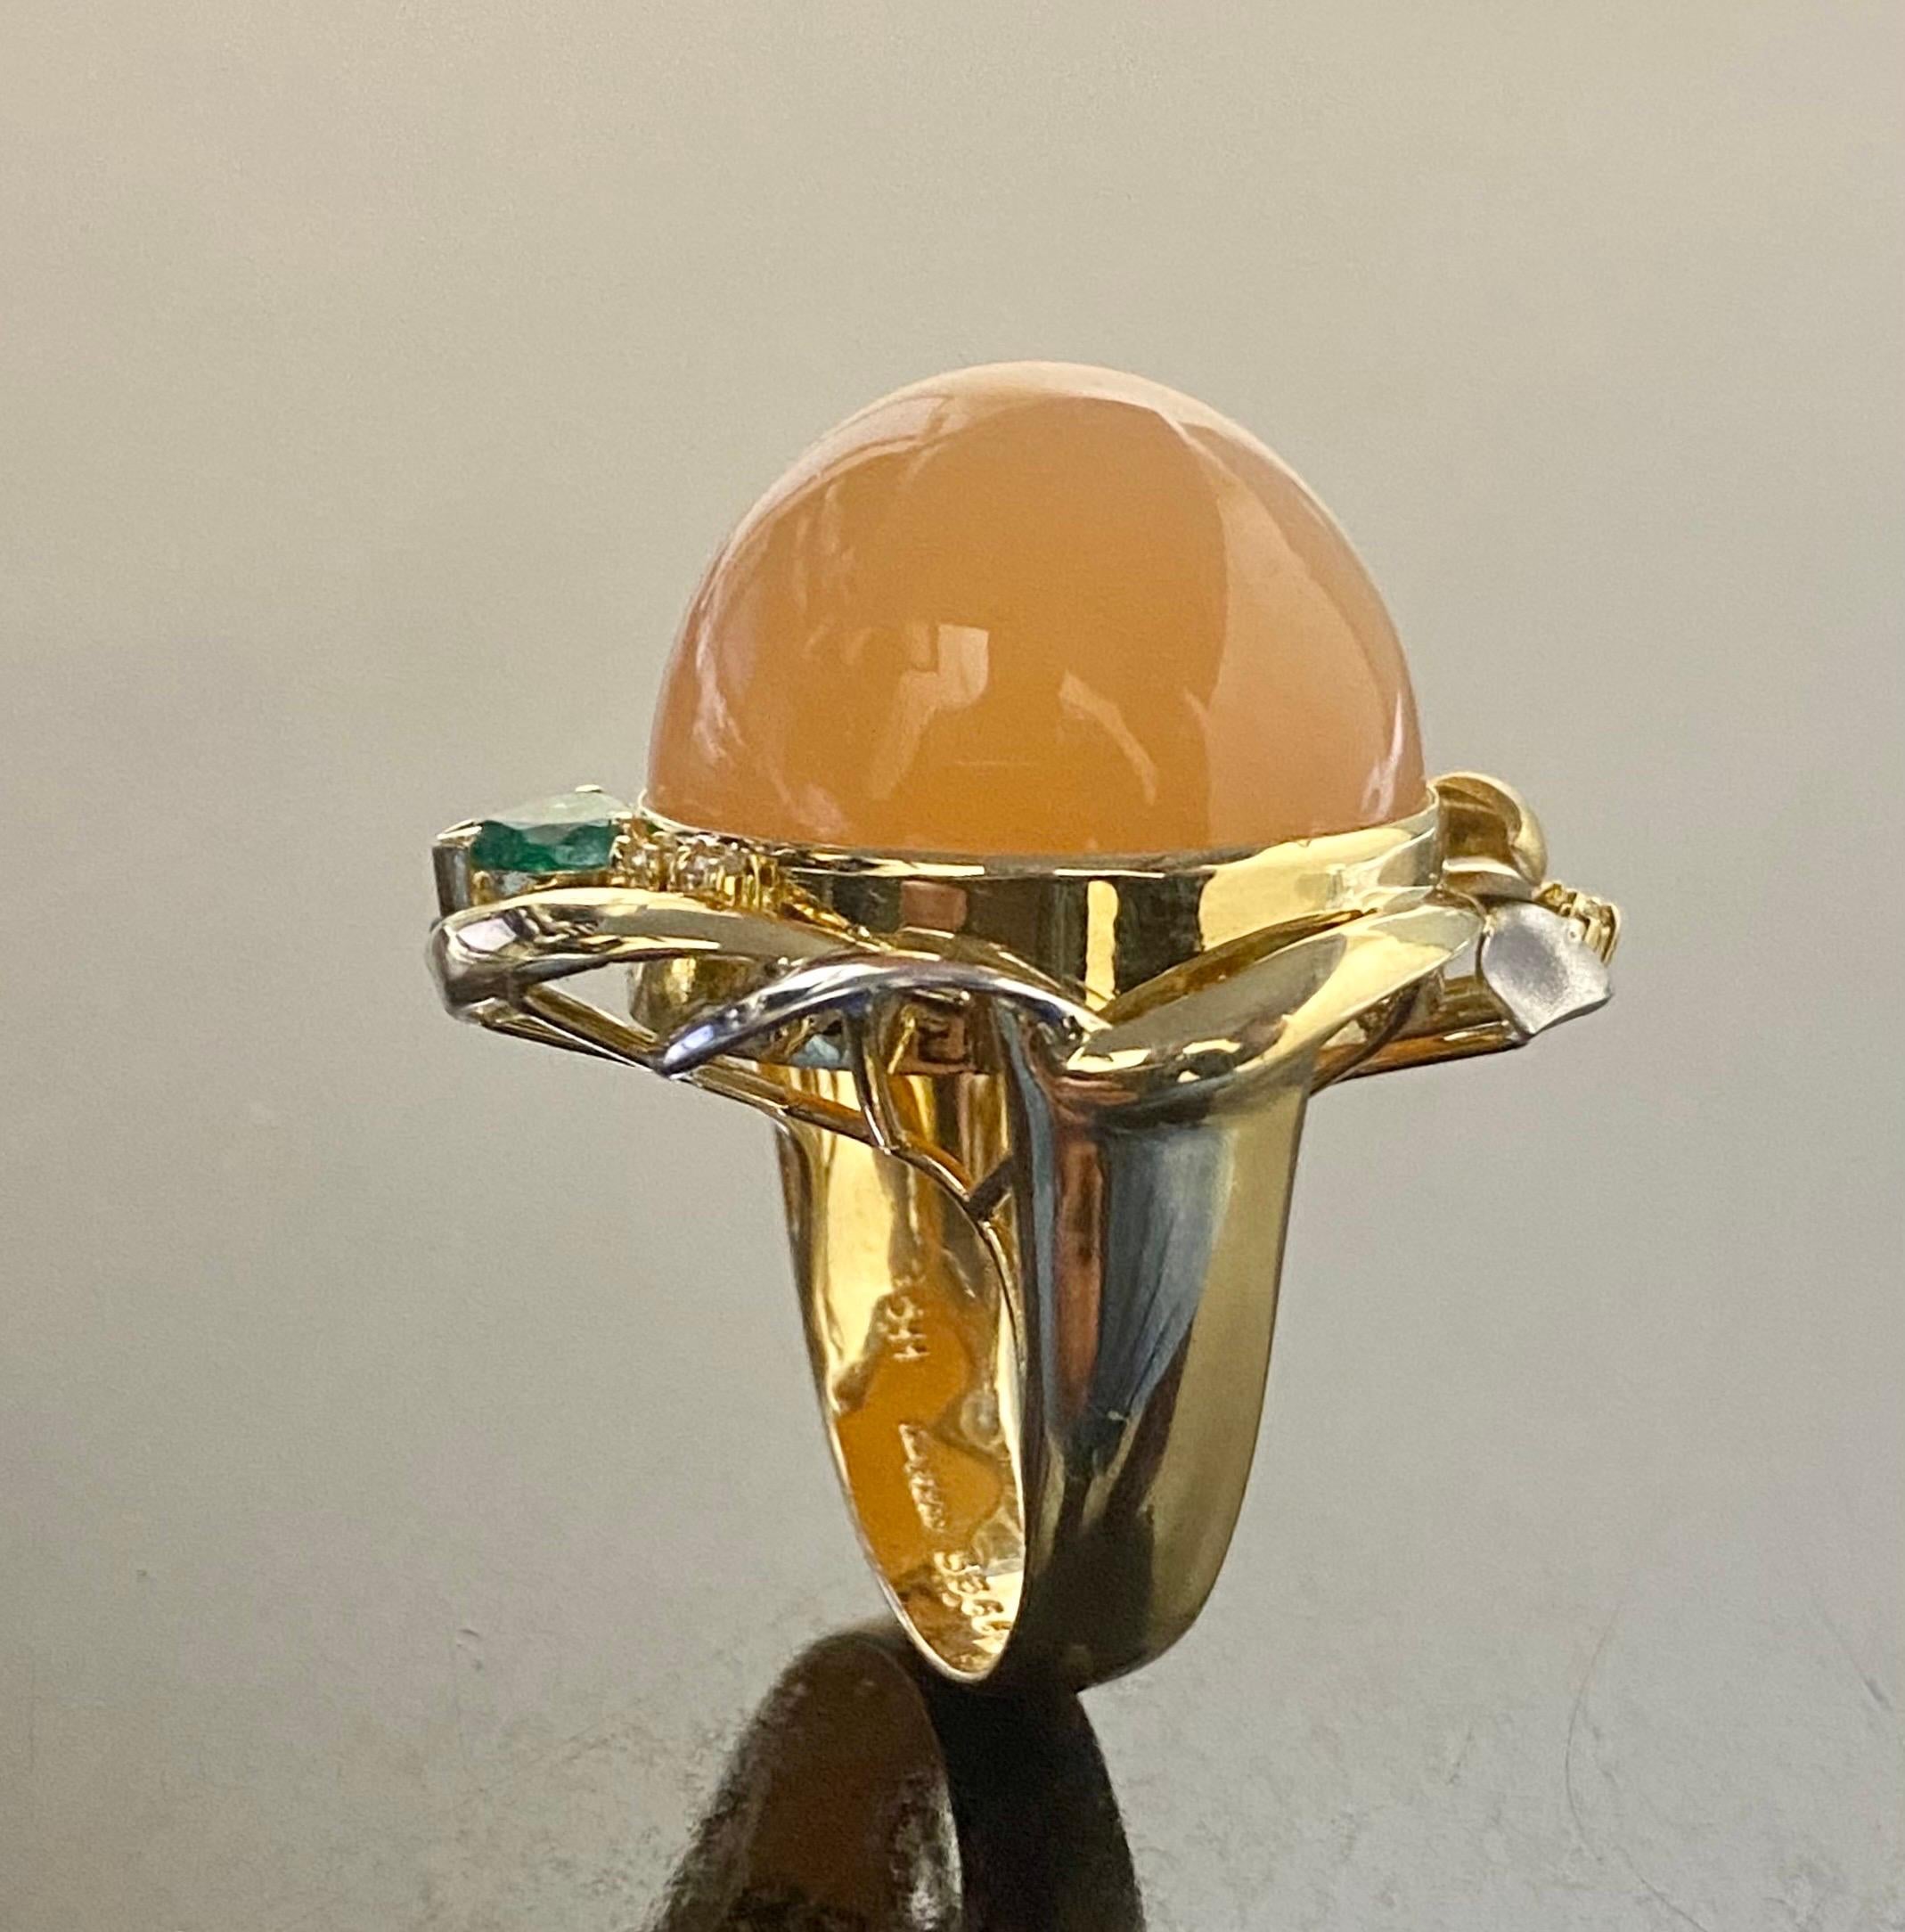 DeKara Design Collection 

Metal- 18K Yellow Gold, .750.  90% Platinum, 10% Iridium.

Stones- Genuine Cabochon Cat's Eye Pink Moonstone 53.66 Carats, Heart Shape Colombian Emerald 0.43 Carats,   4 Round Diamonds G-H Color SI1 Clarity 0.11